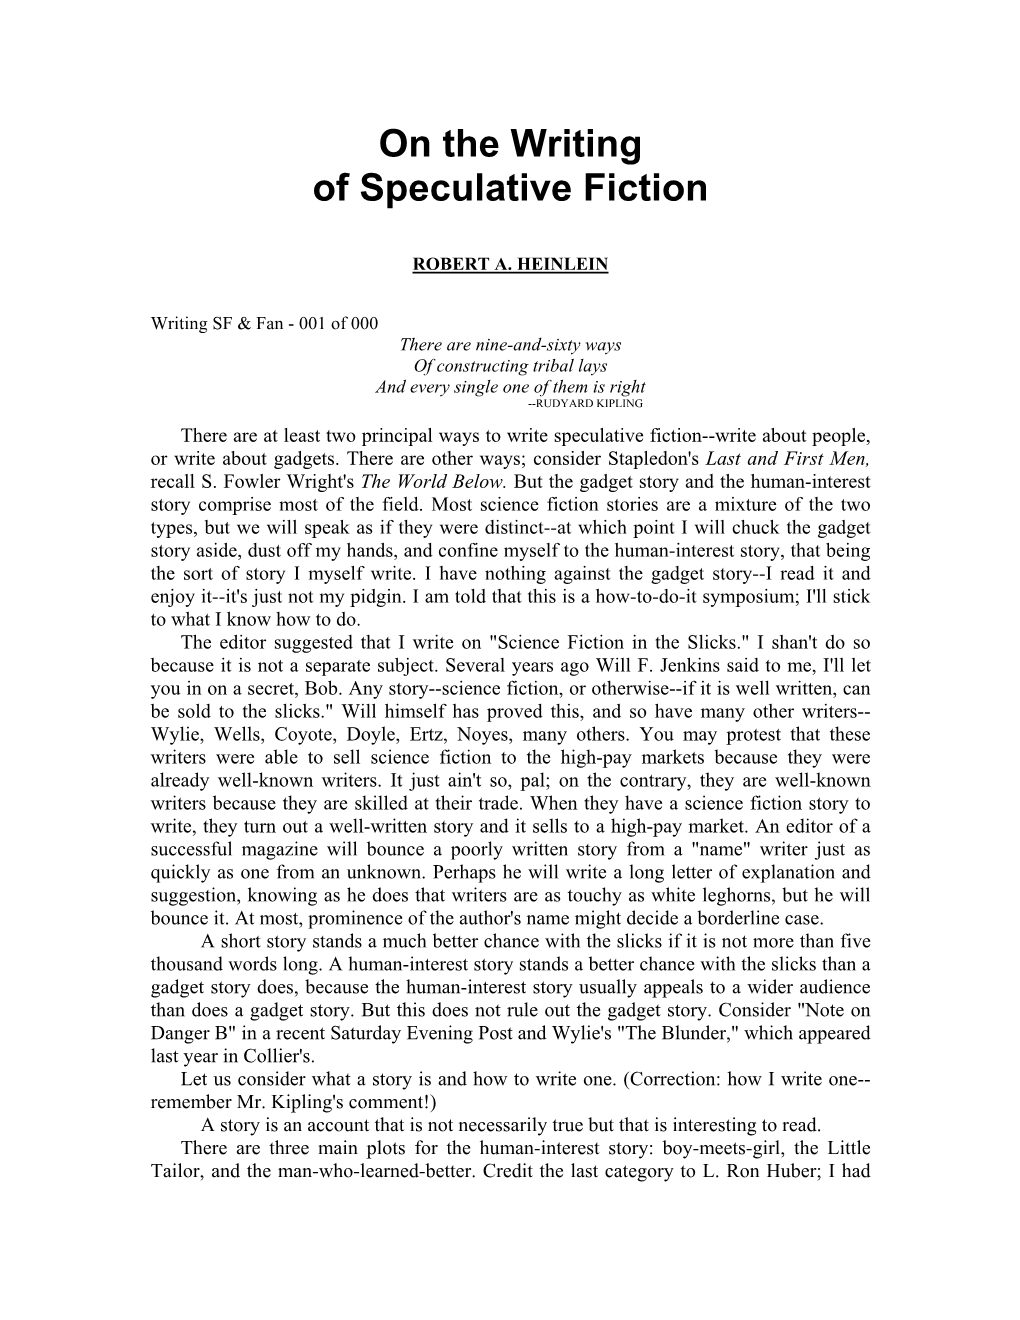 speculative fiction essay